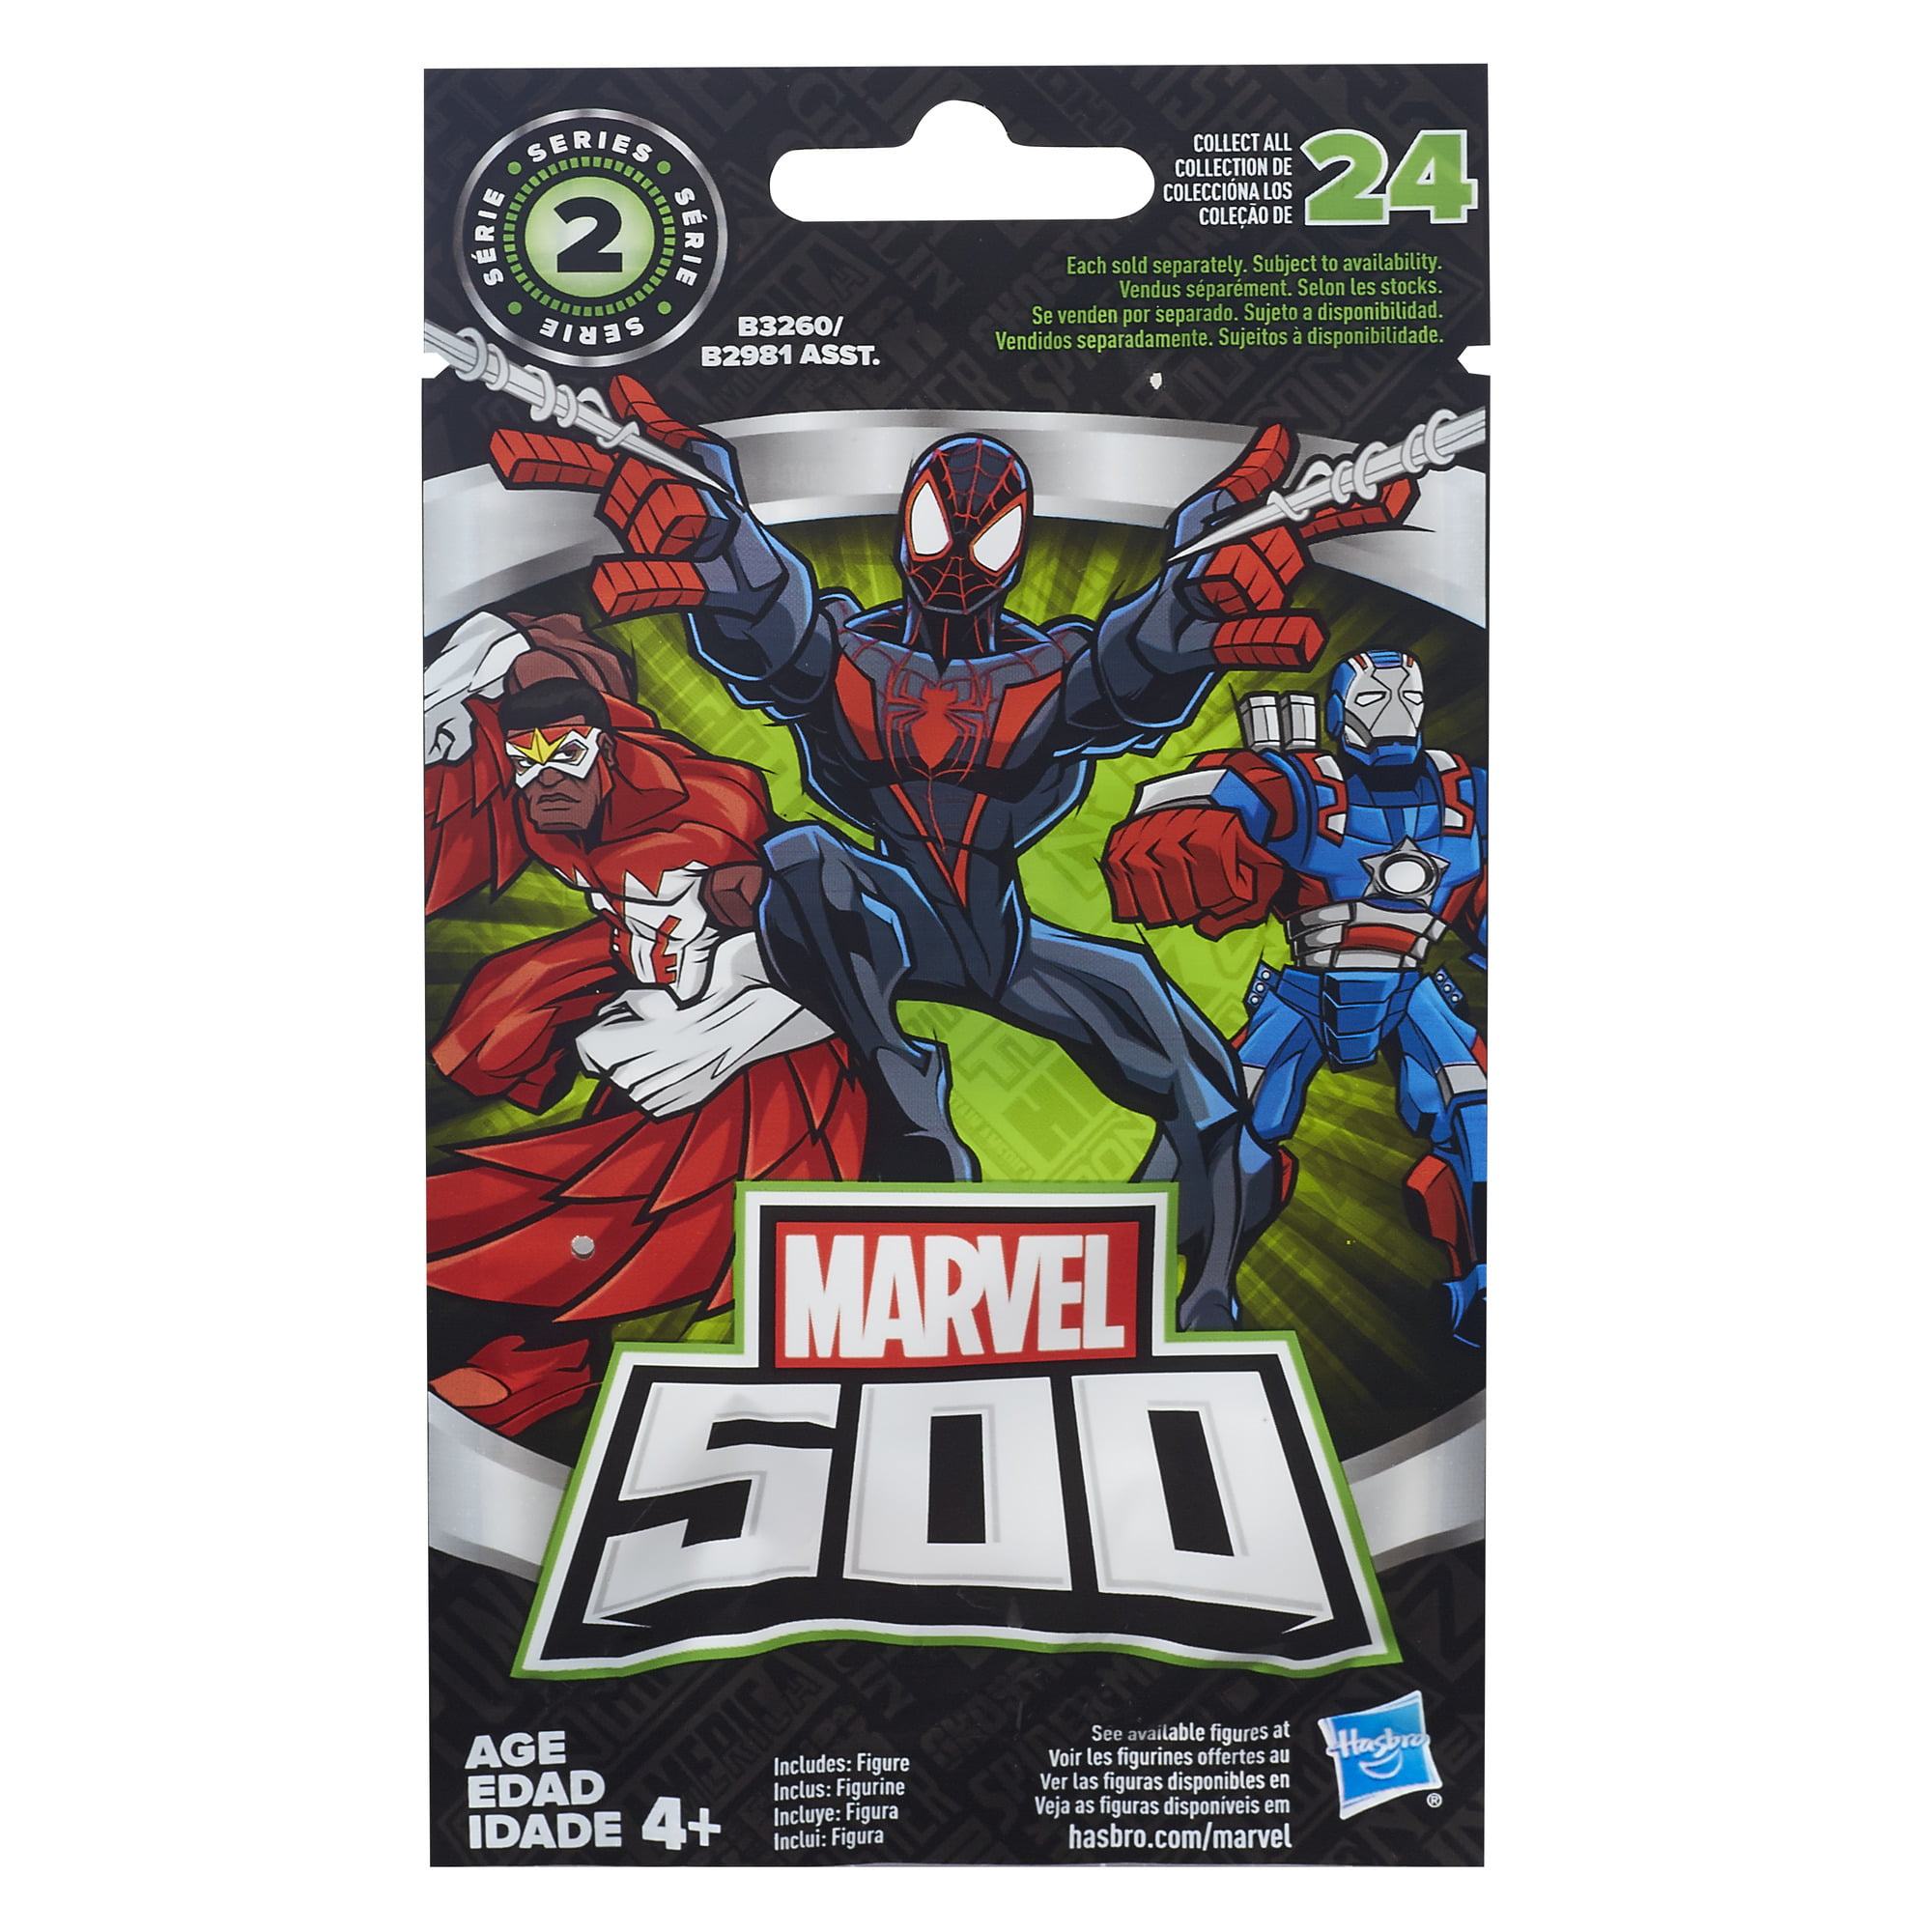 Marvel 500 Series 2 2Inch Collectible Figures Walmart